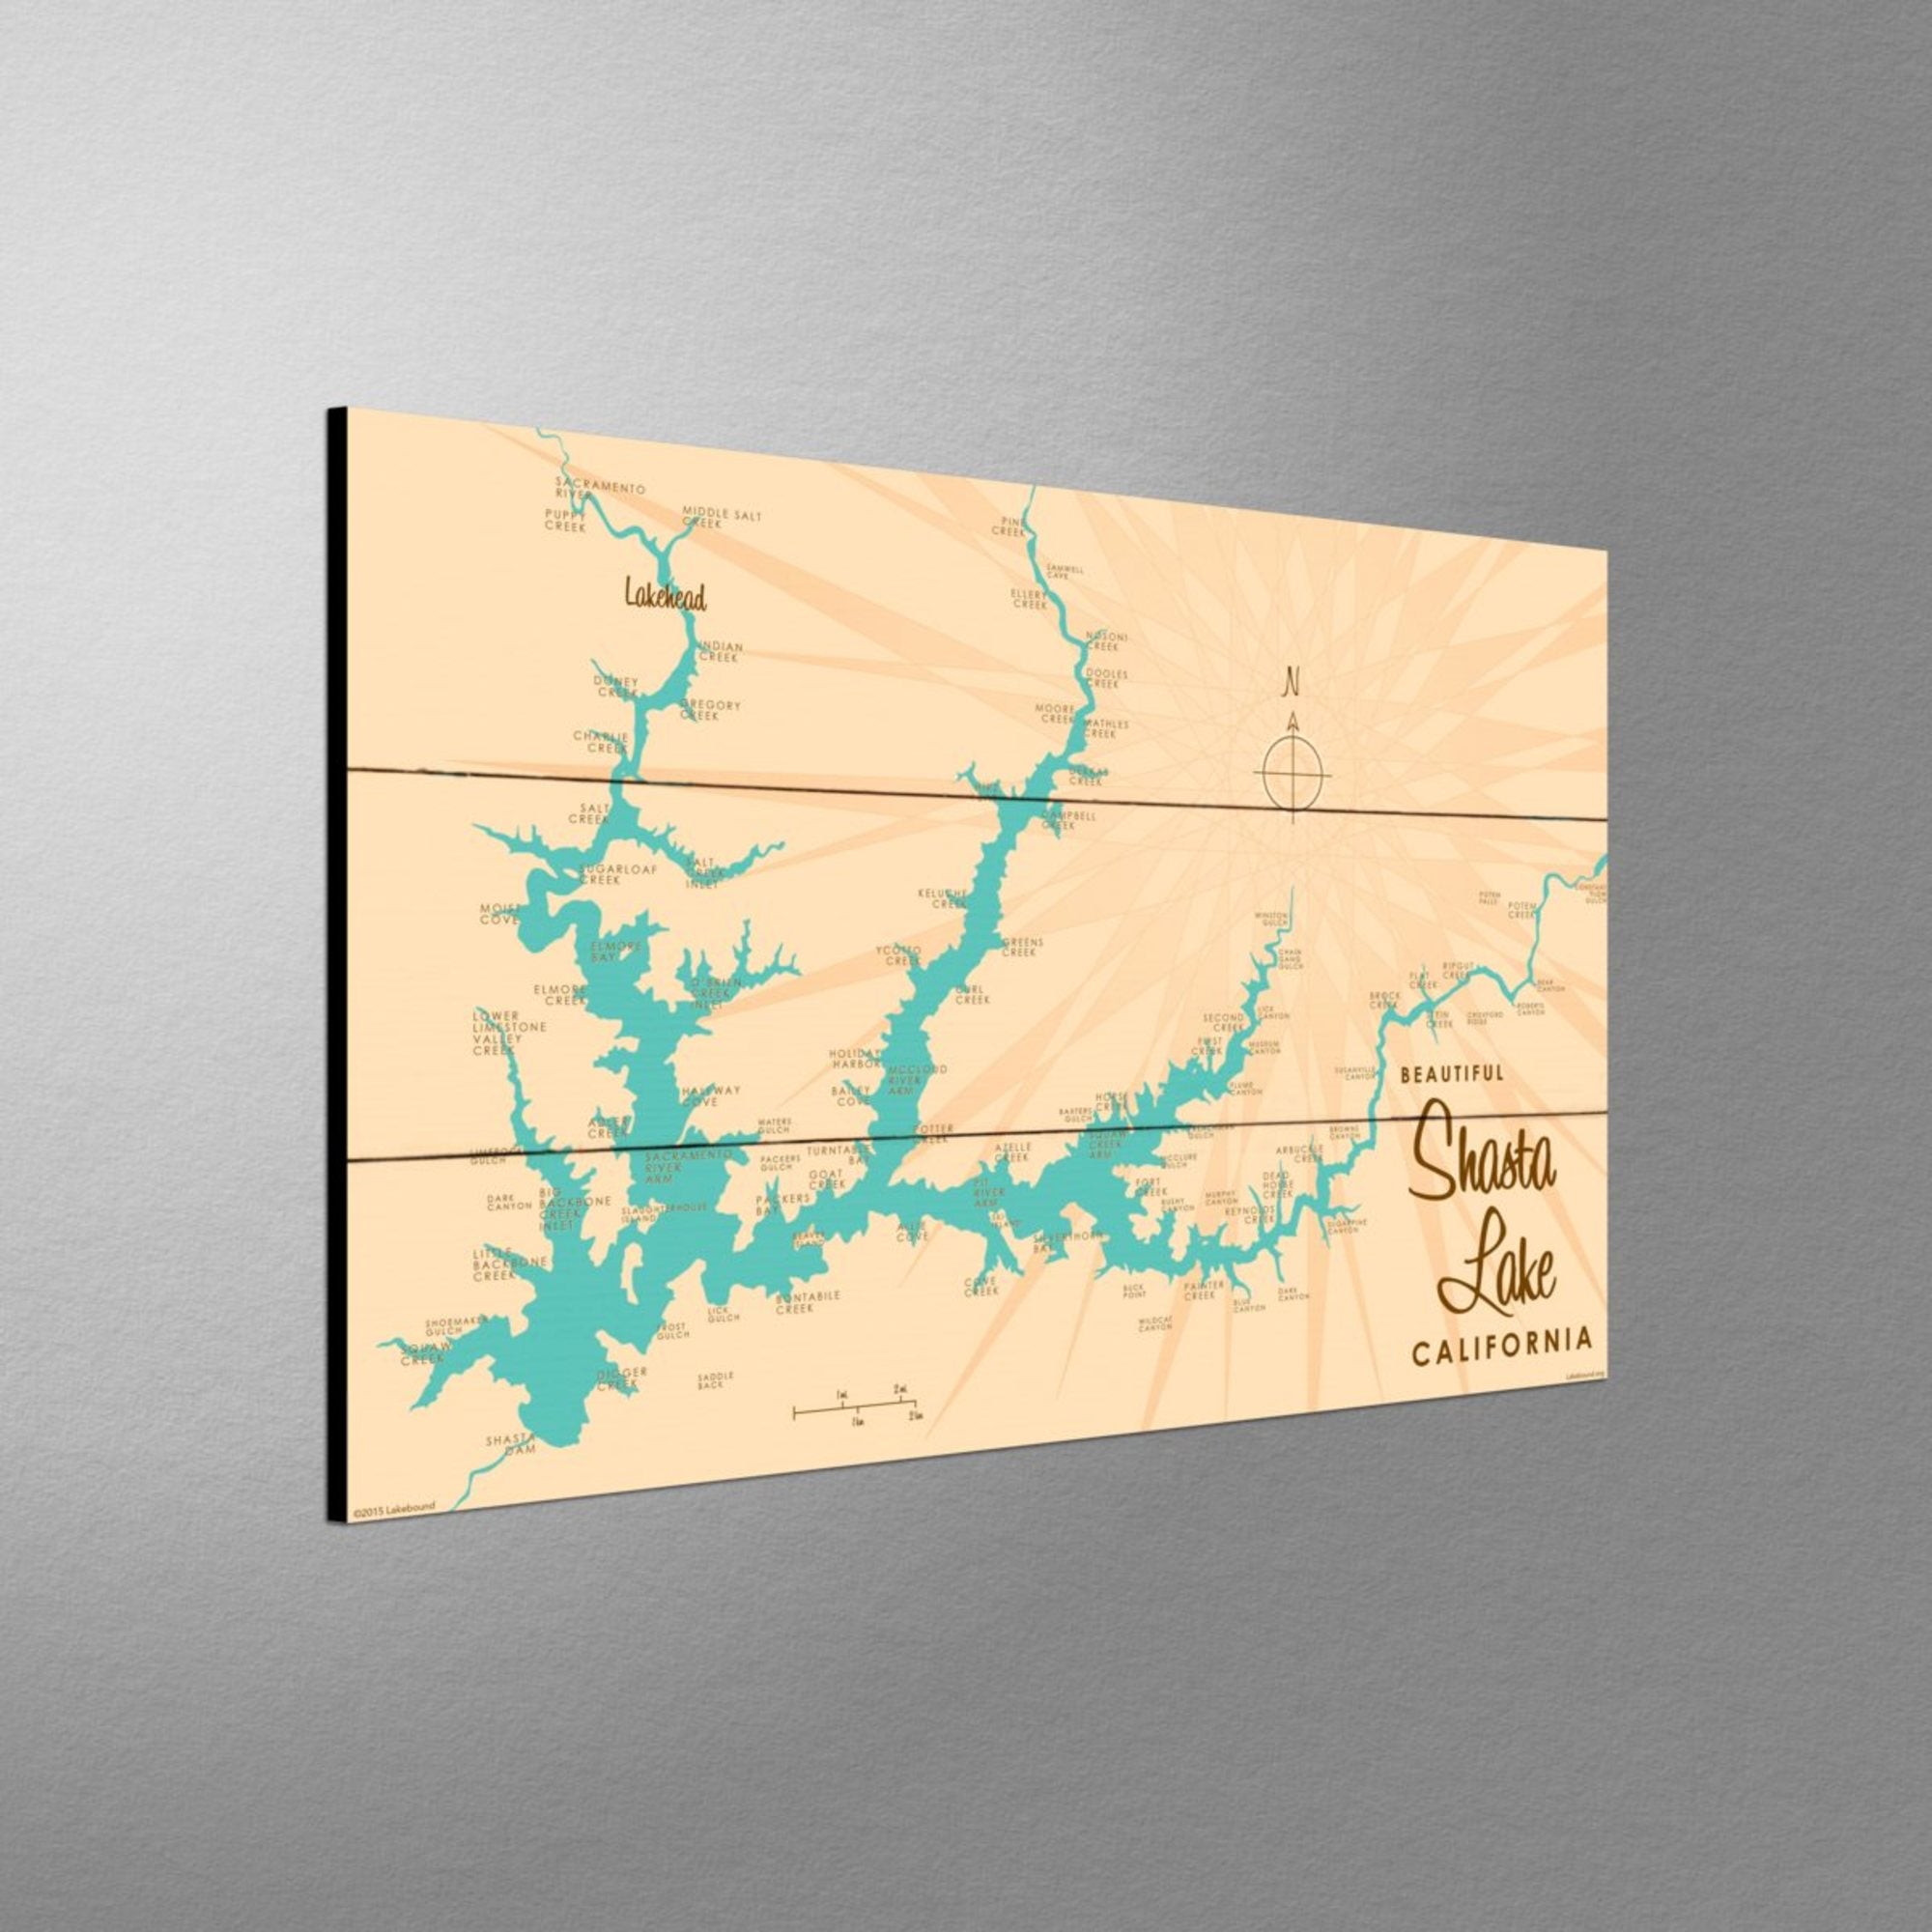 Shasta Lake California, Wood Sign Map Art